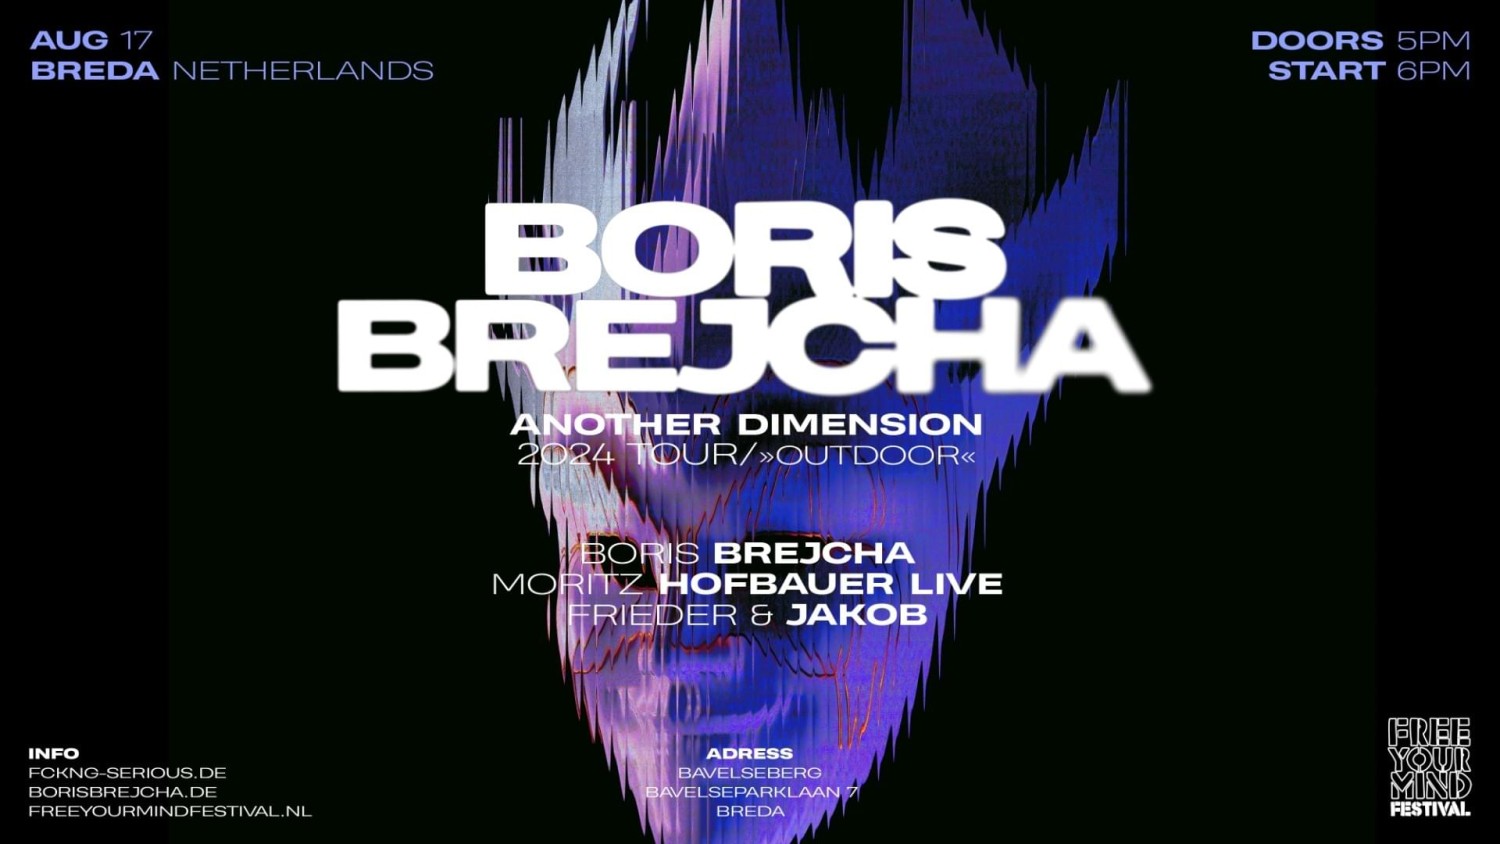 Party nieuws: Ticketverkoop Boris Brejcha Another Dimension Tour gestart